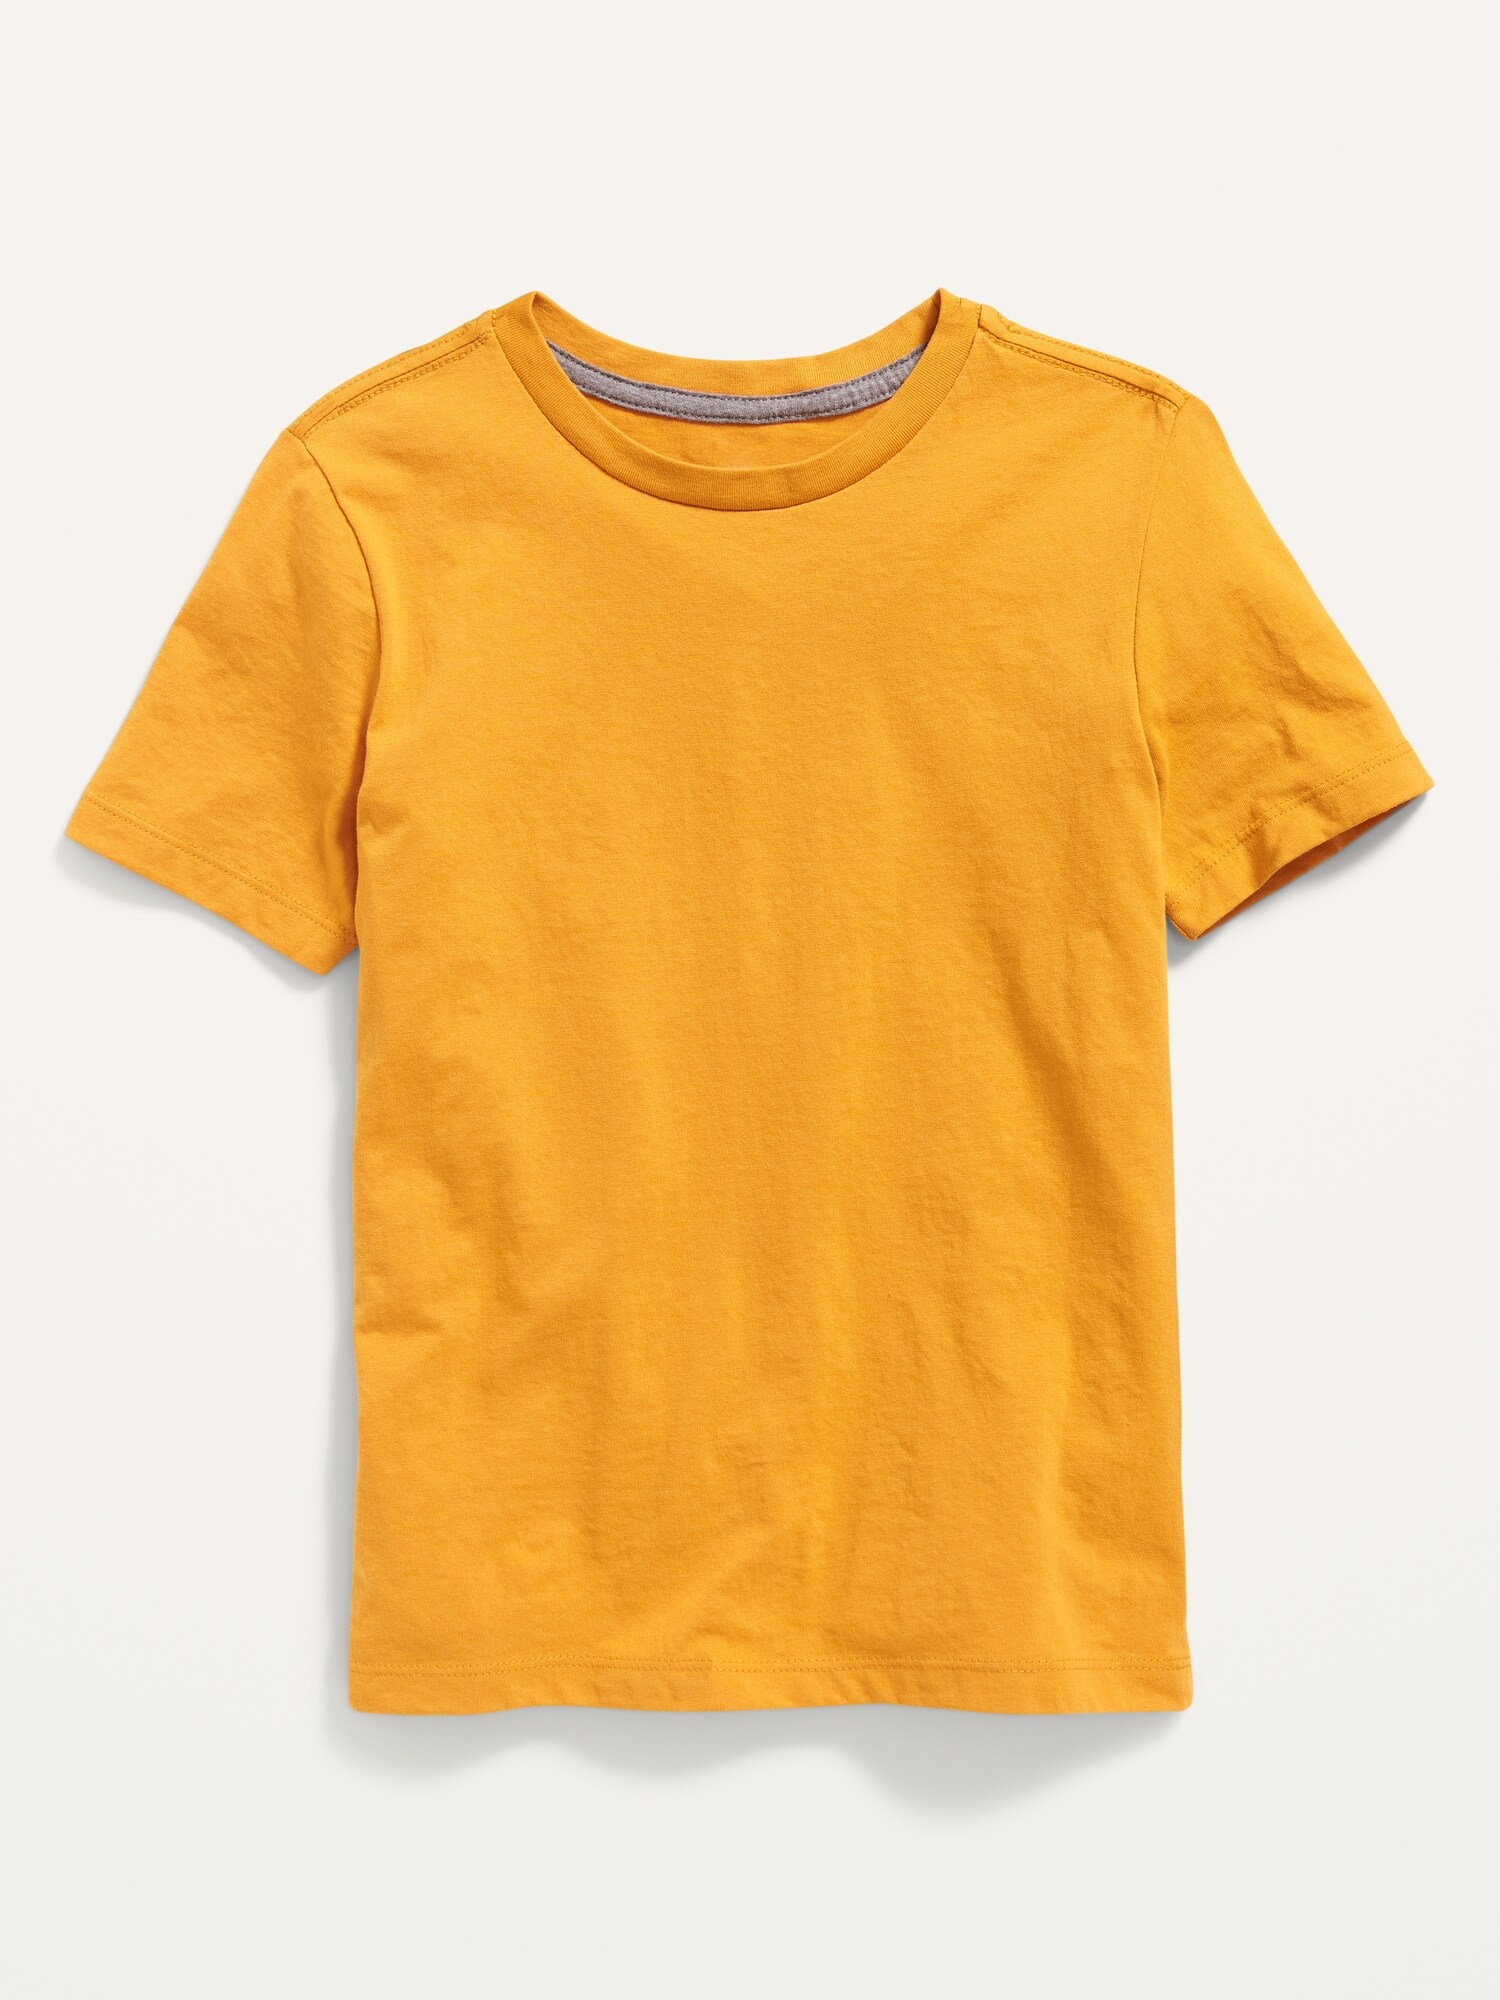 Boys Plain T-Shirts | Old Navy